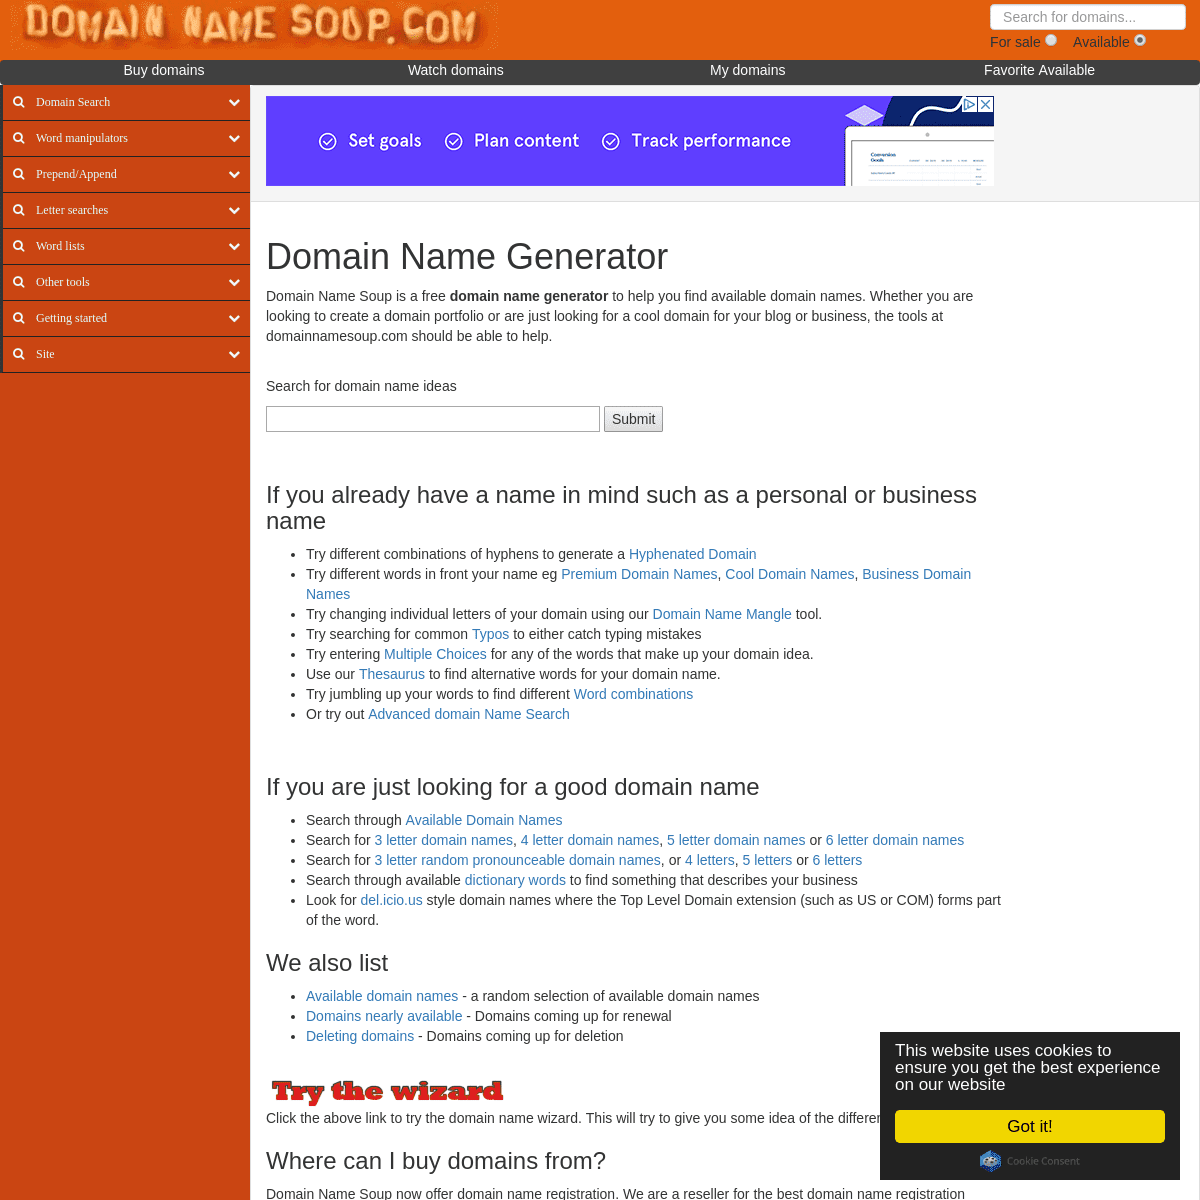 A complete backup of domainnamesoup.com